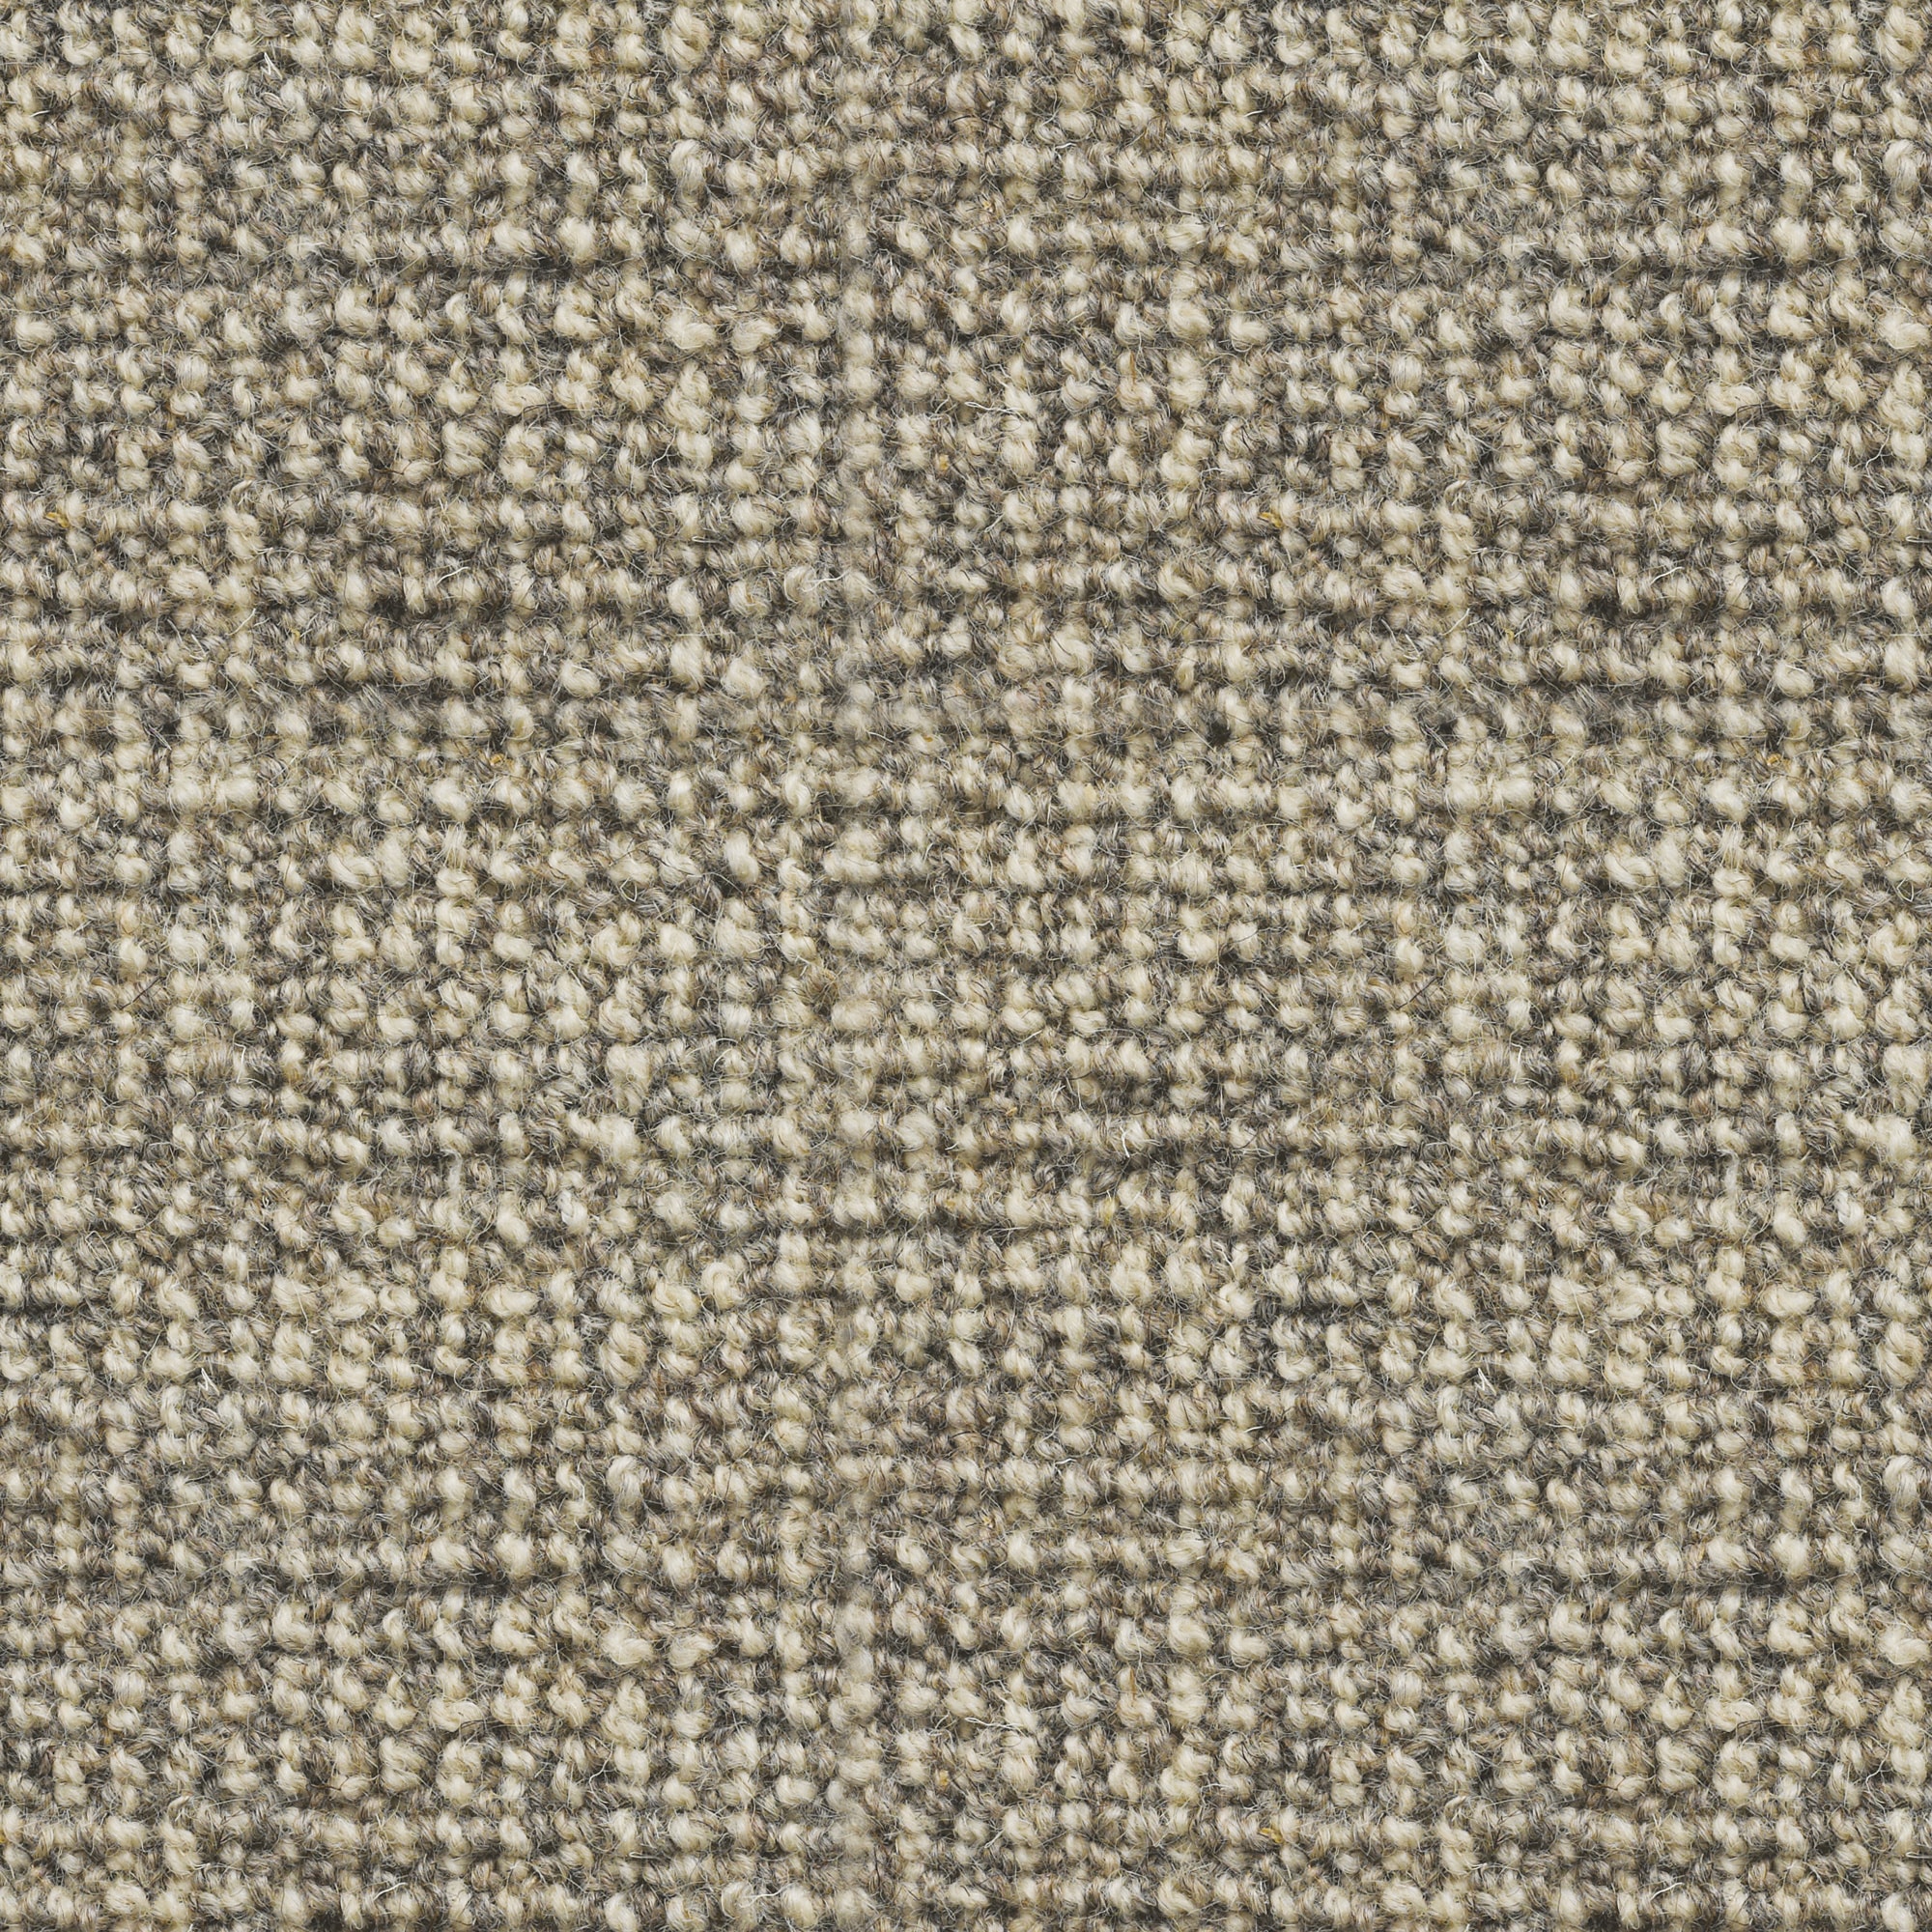 Rustic Croft: Cobble Stone - 100% Wool Carpet